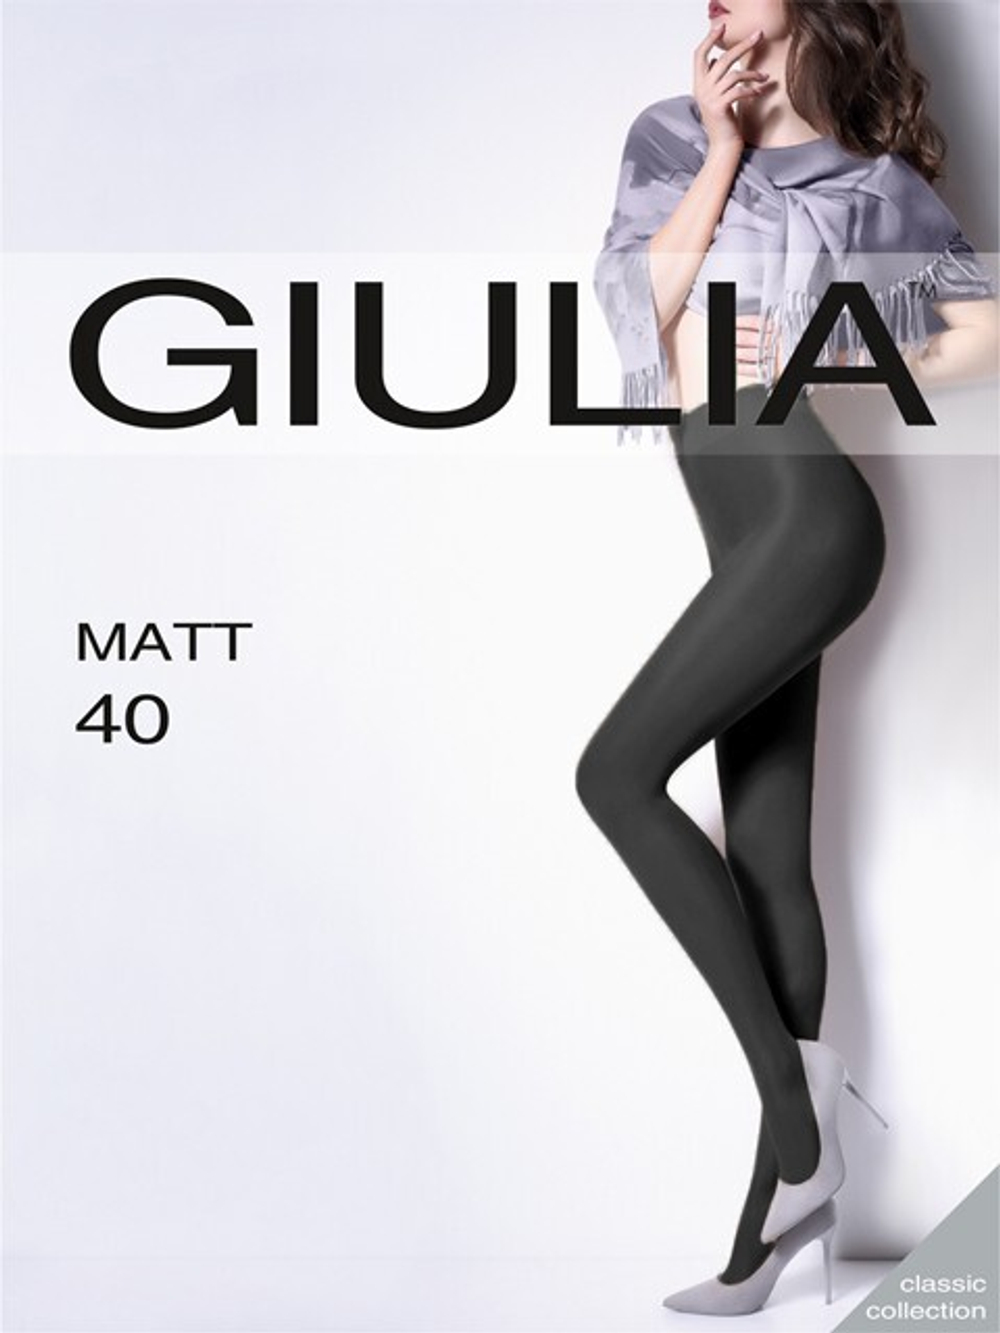 Колготки Matt 40 Giulia